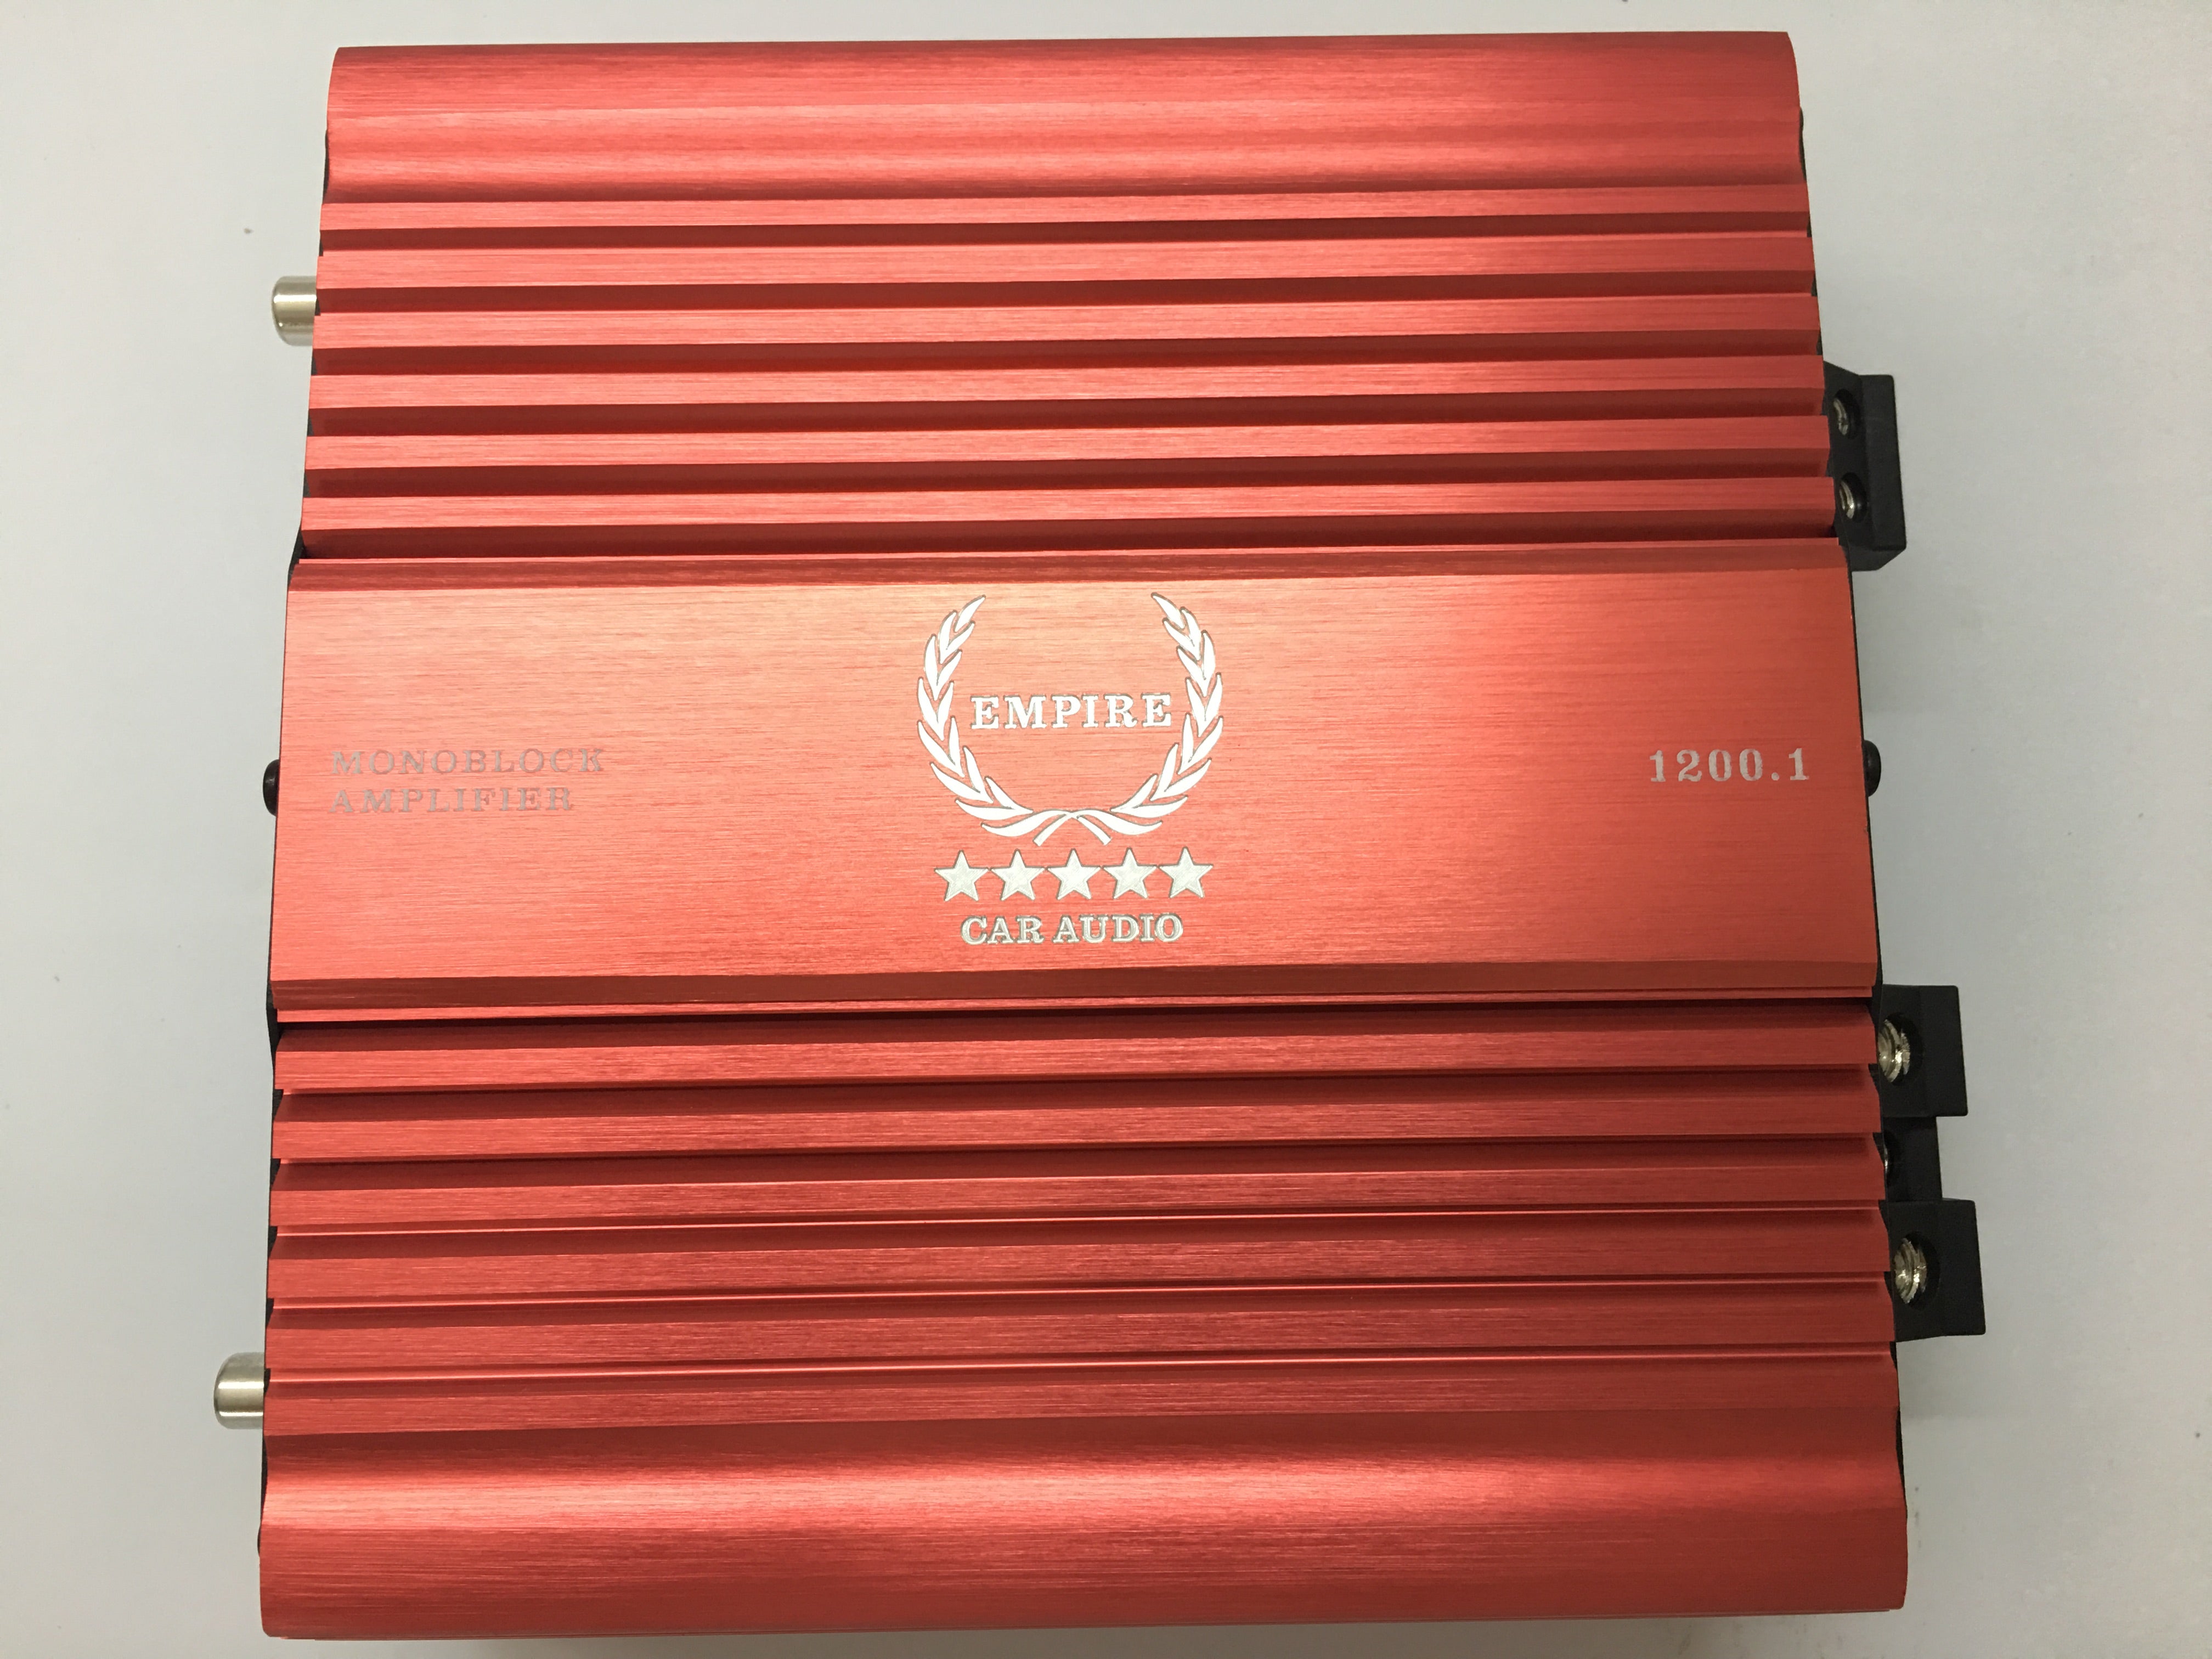 Empire 1200.1 Class D Mono Block Amplifier